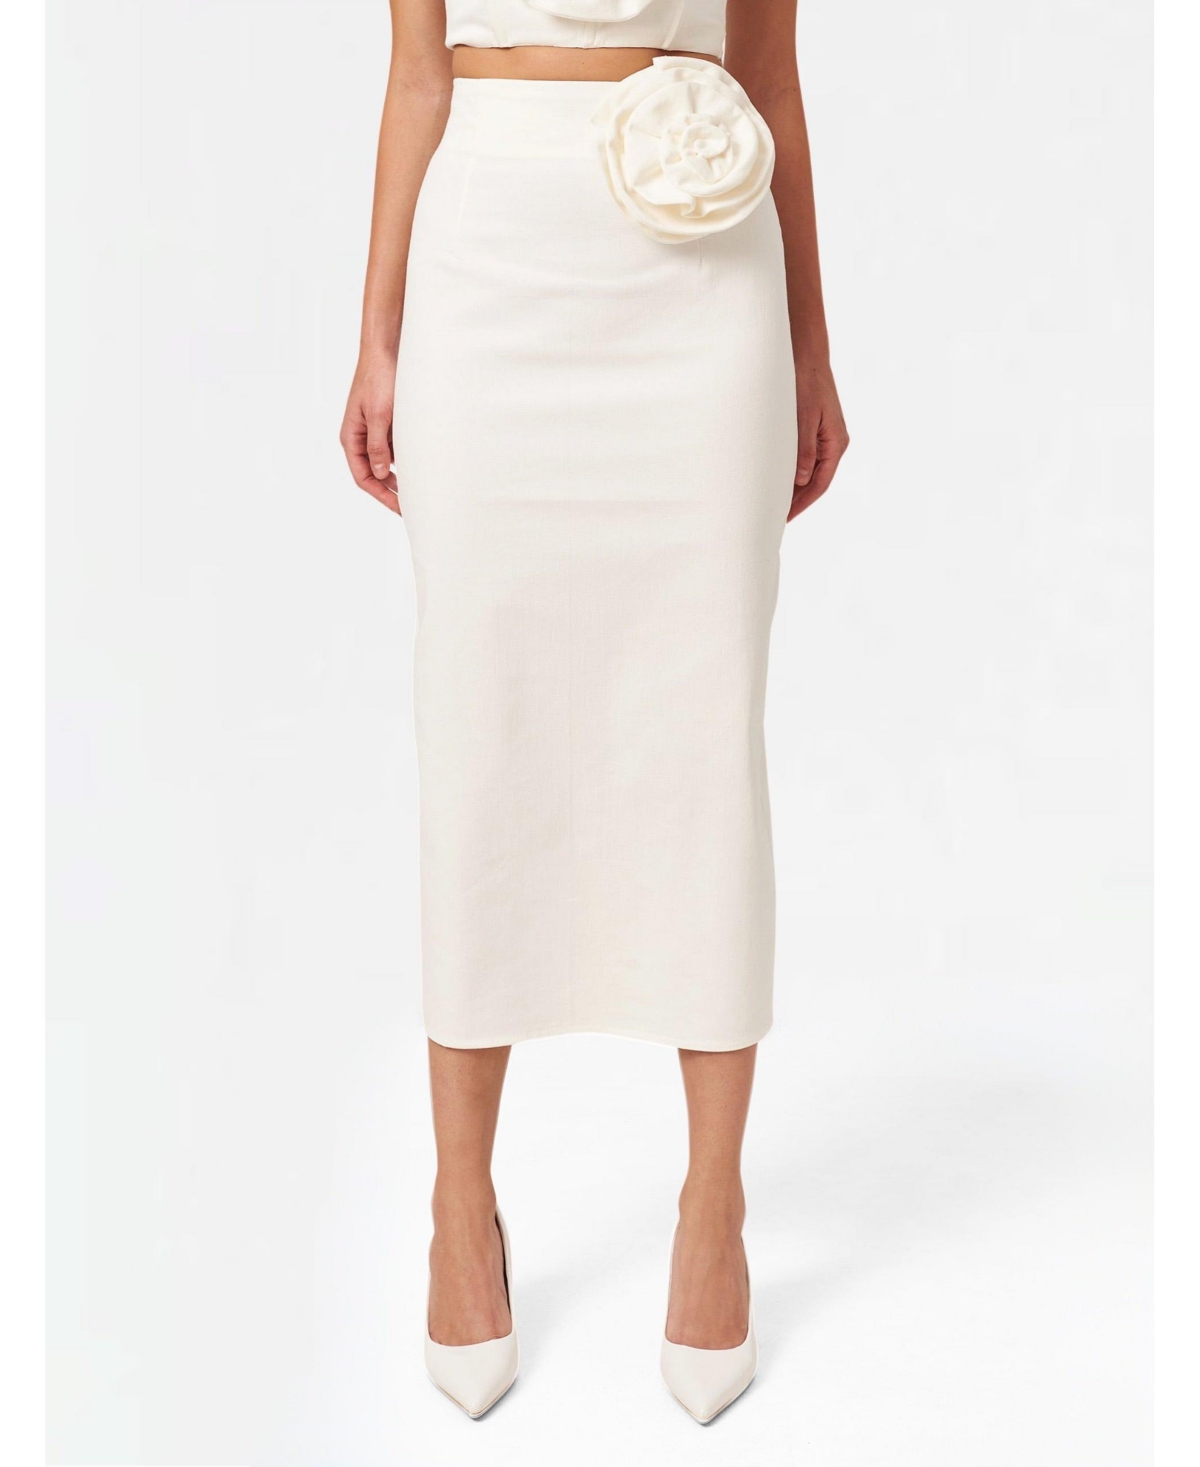 Women's Denim pencil skirt with rose detail, mid-rise - White